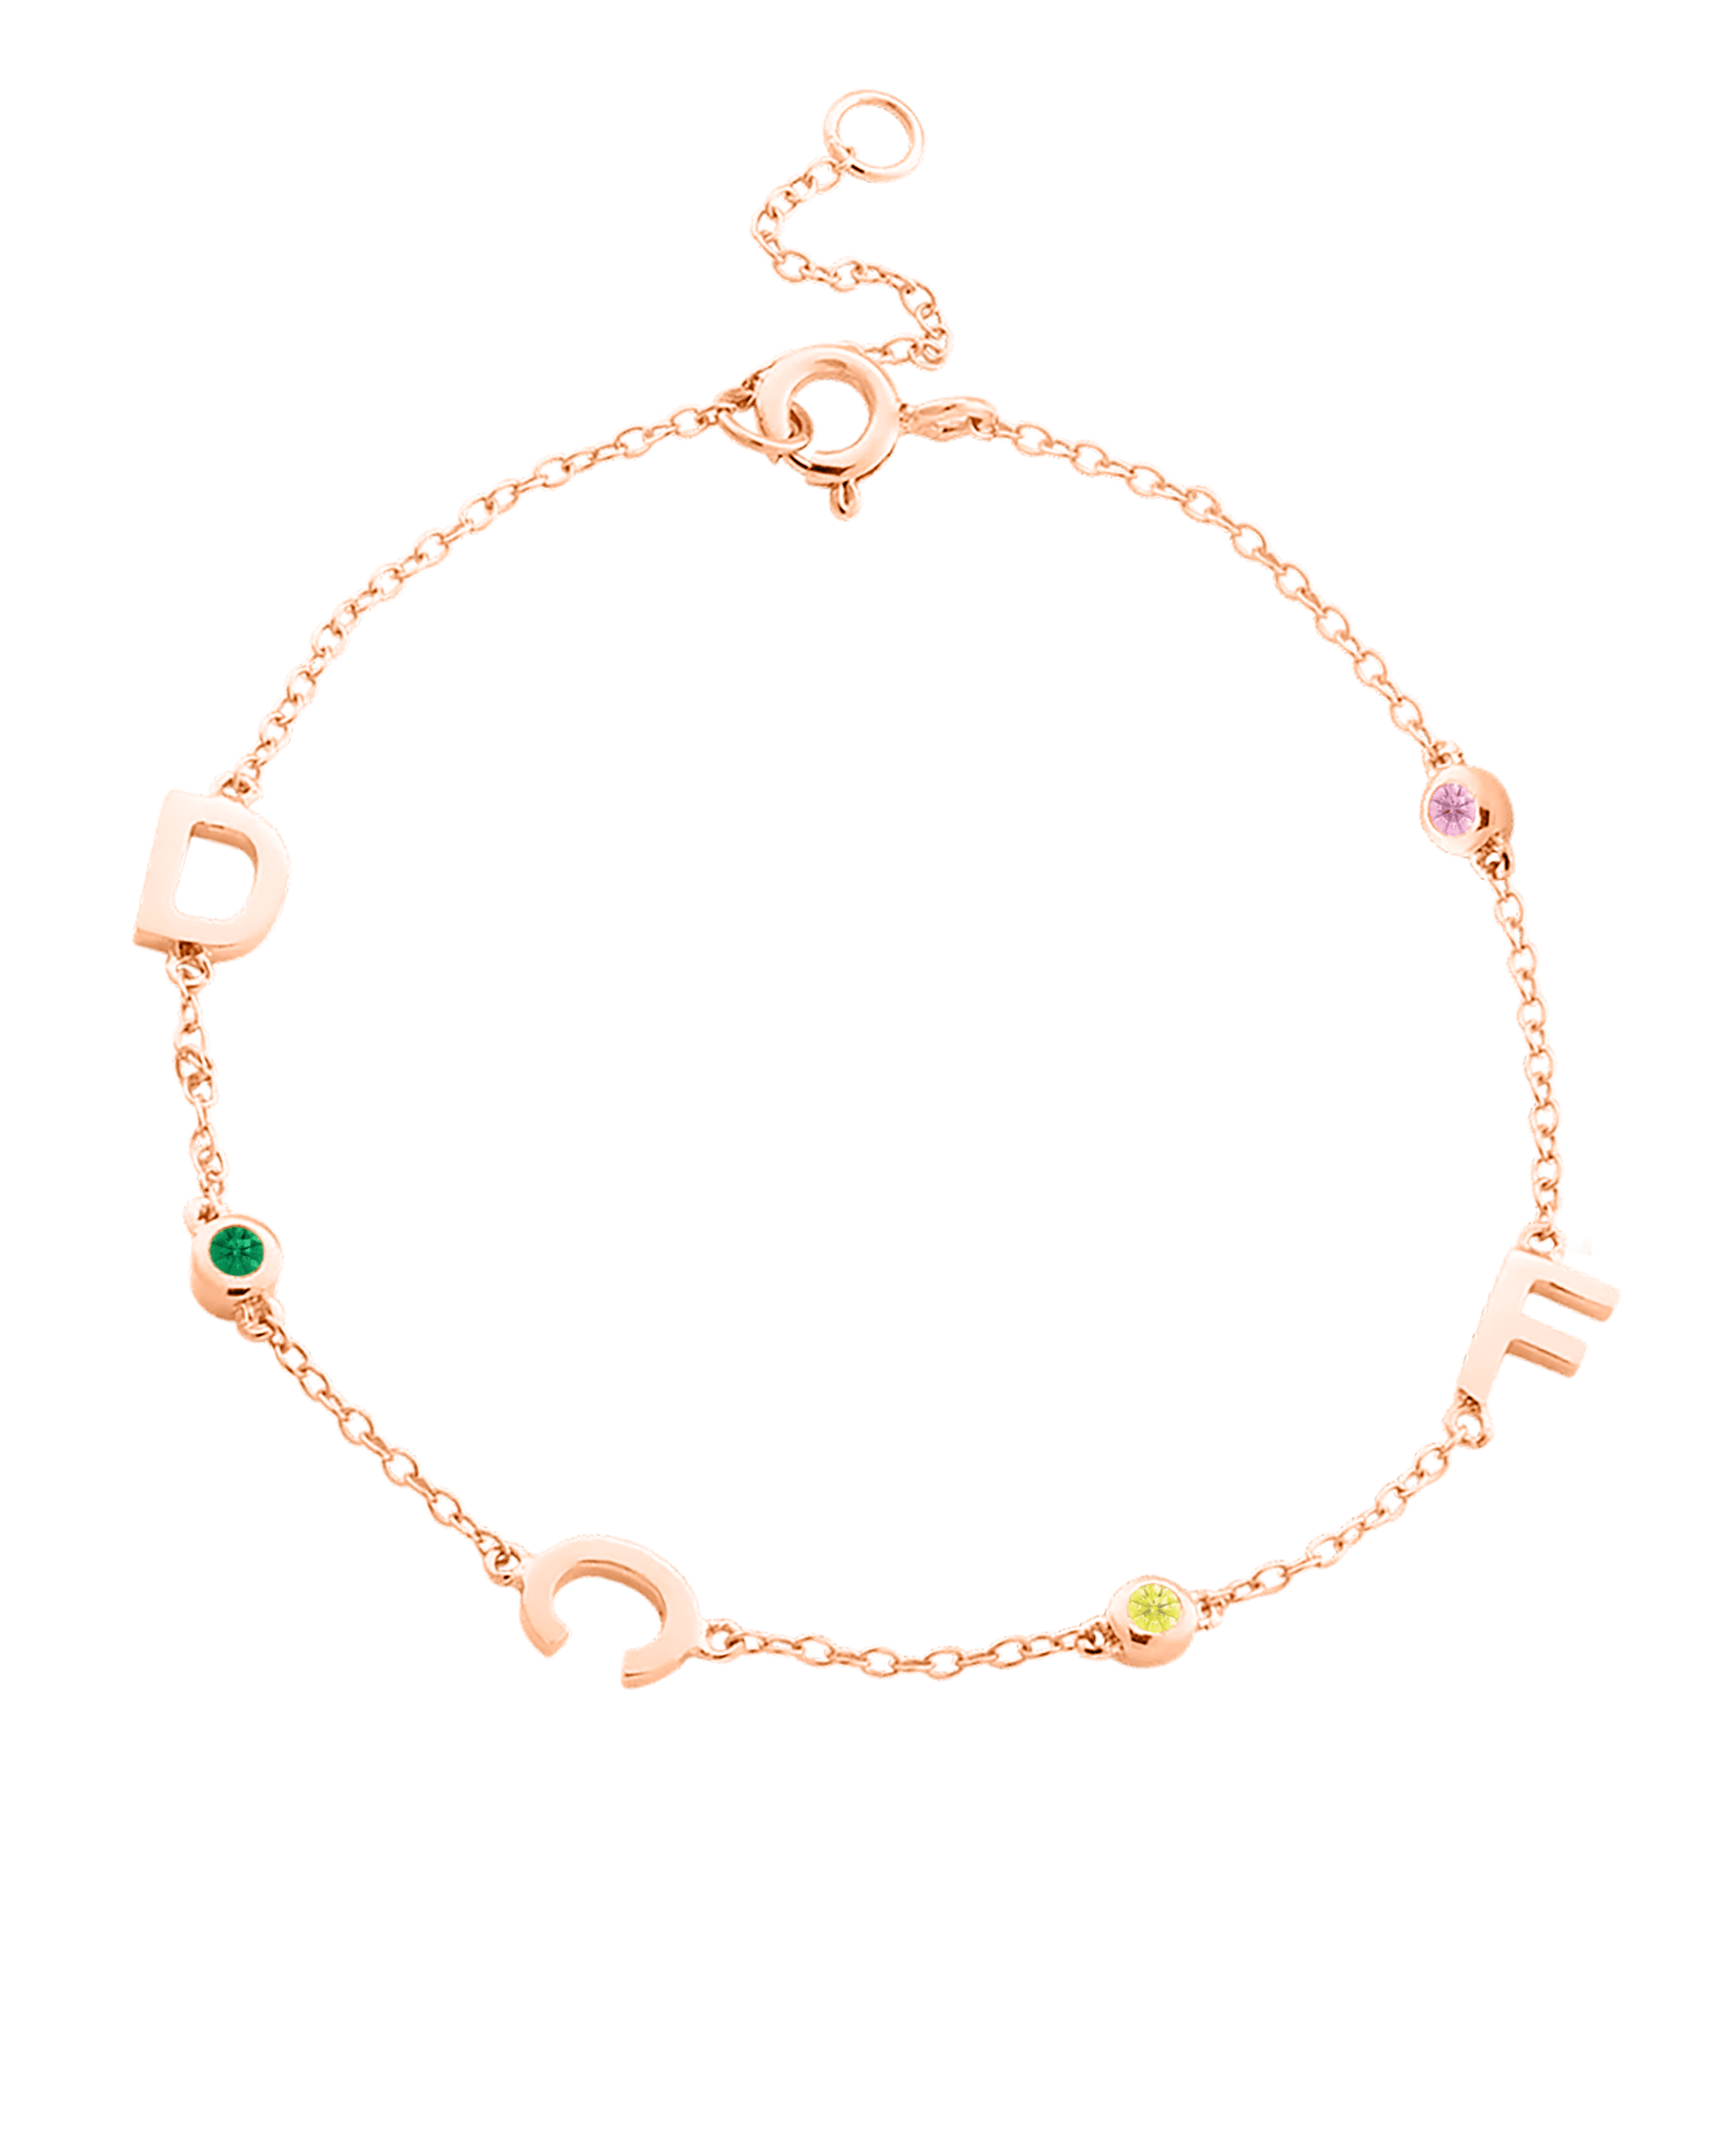 The Initial Birthstone Bracelet - 14K Rose Gold Bracelets magal-dev 1 Initial 6"-7" (S-M wrist) 